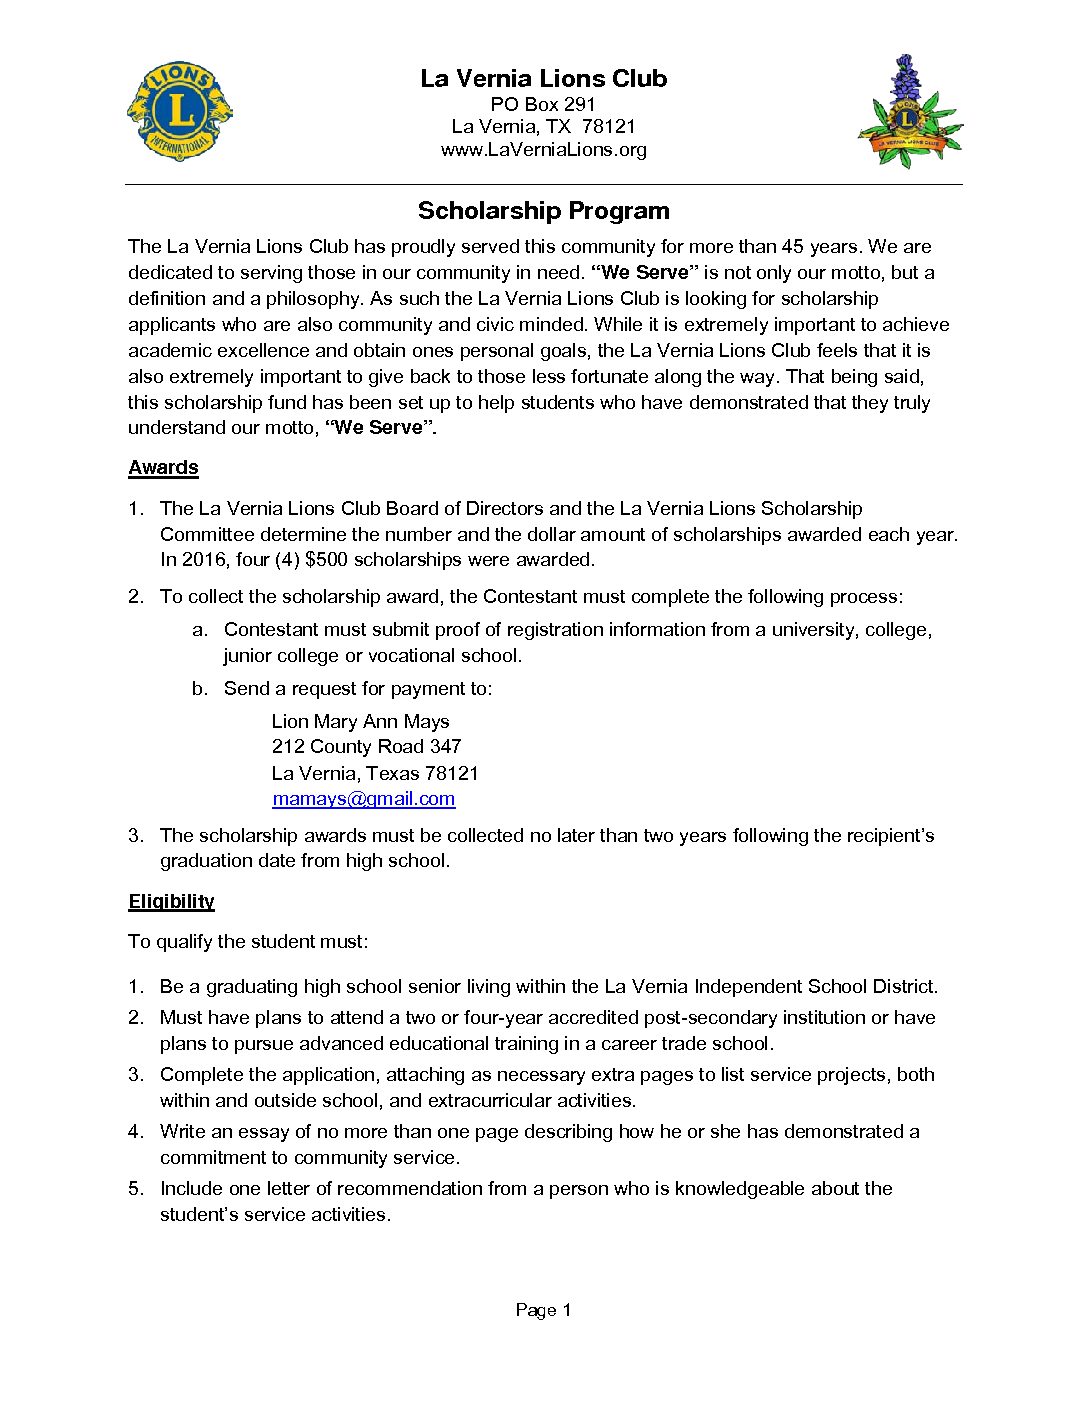 College application essay community service